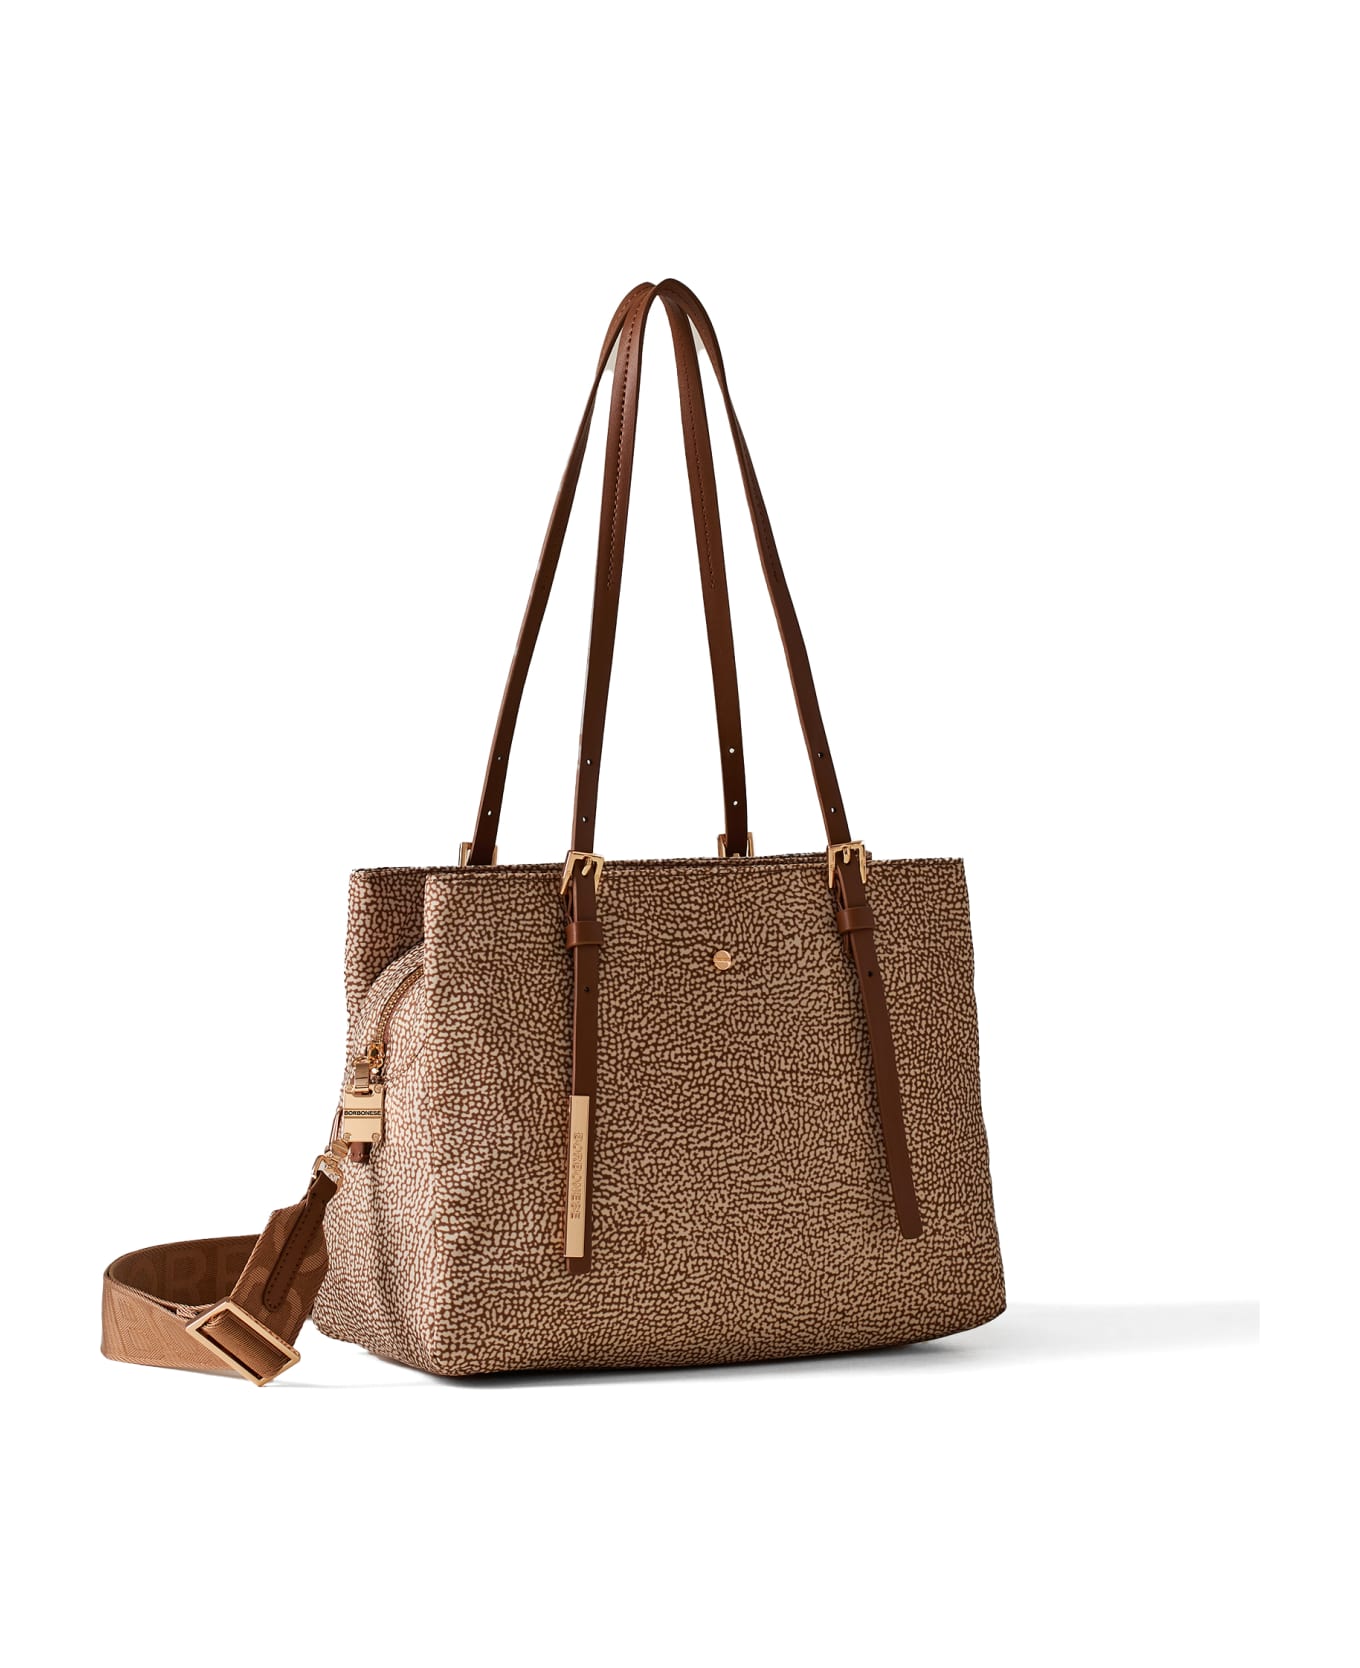 Borbonese Shopping Bag In Op Fabric - BEIGE/MARRONE